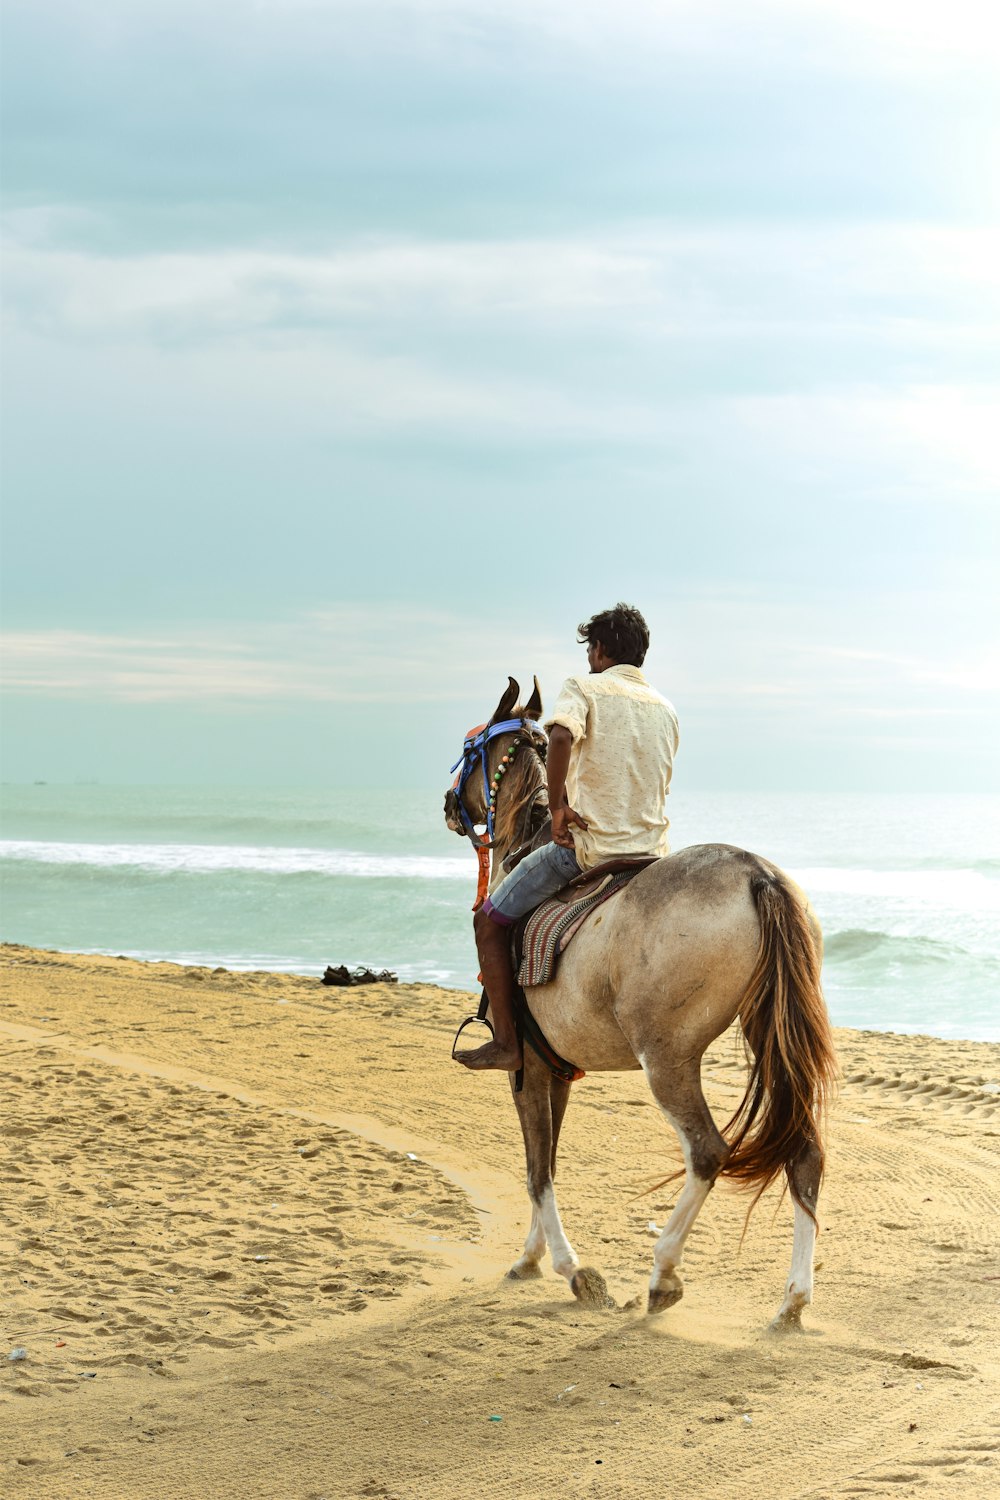 a man riding a horse on the beach